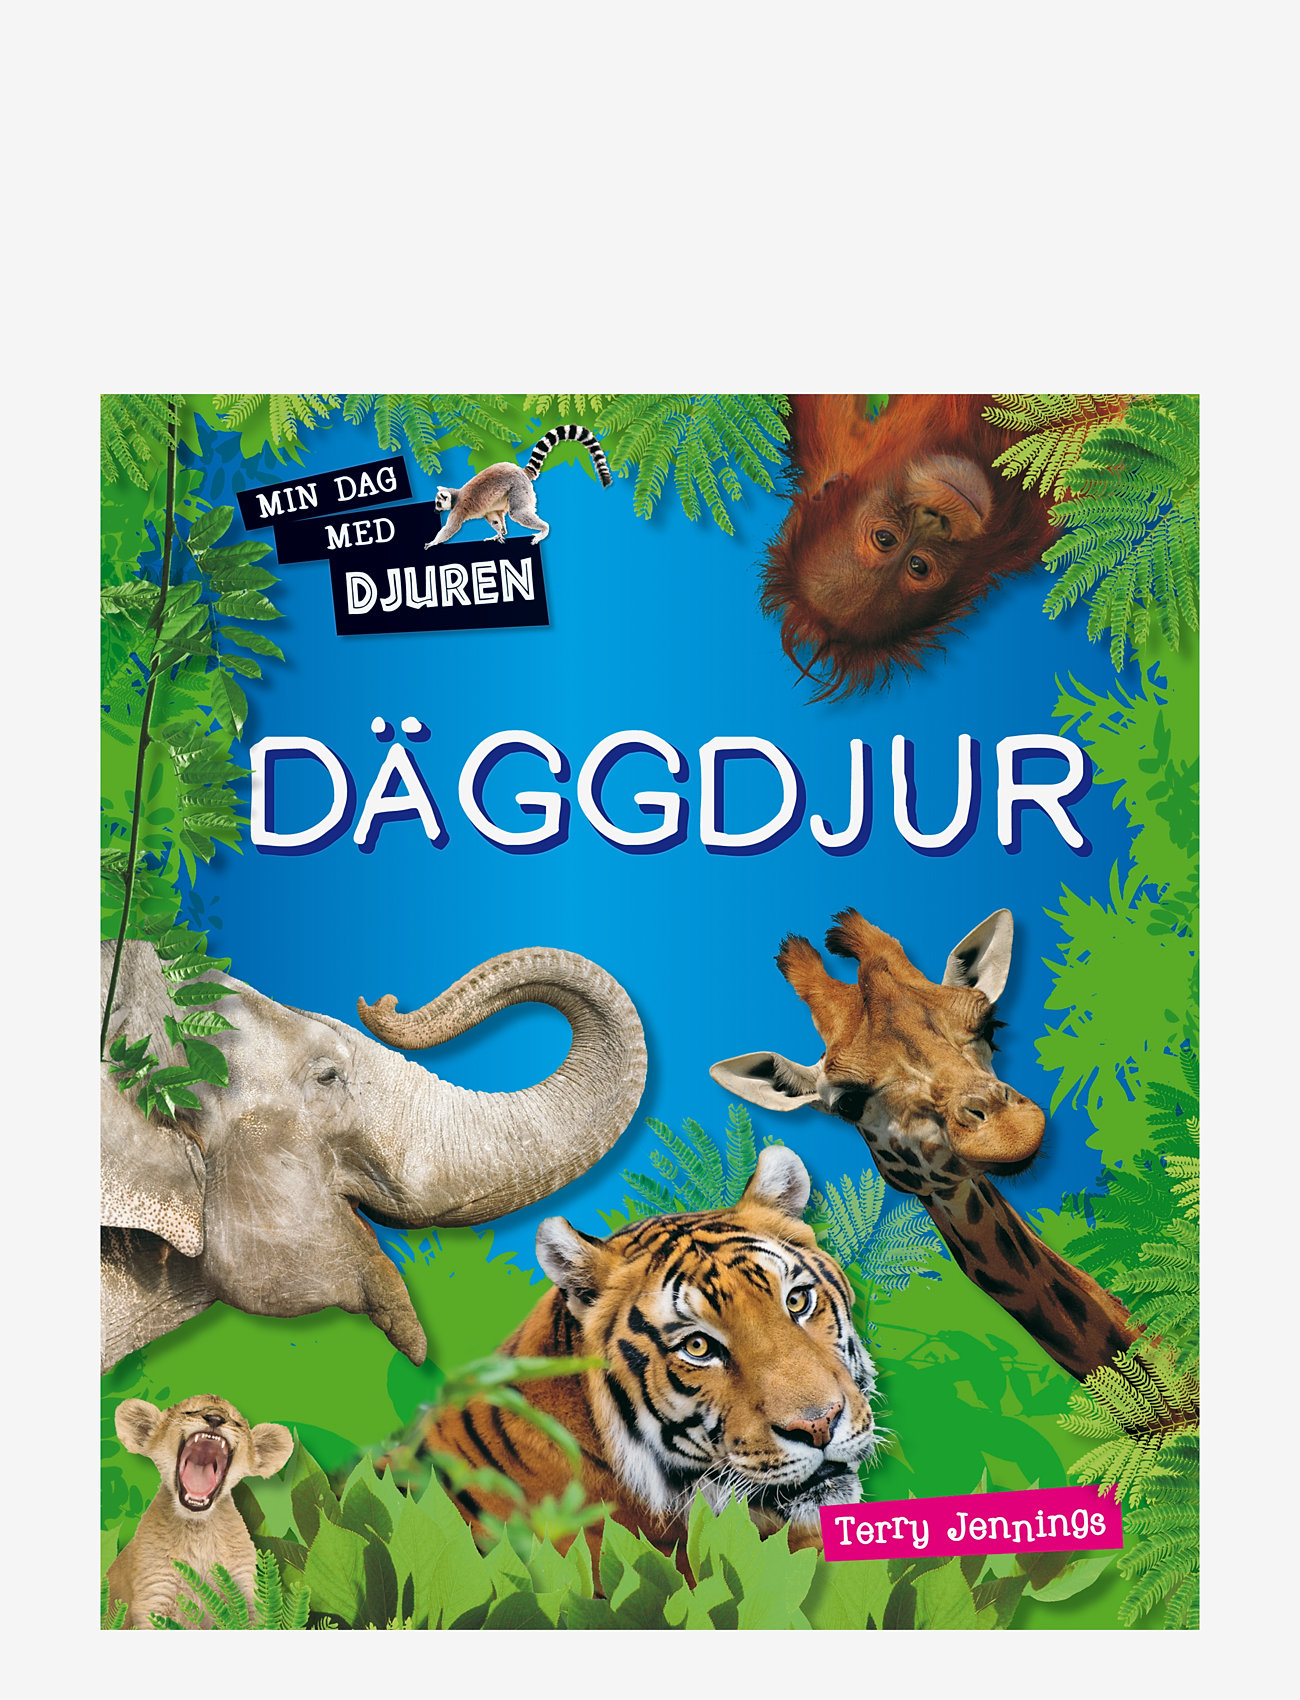 GLOBE - Min dag med djuren: Däggdjur - lowest prices - children's book - 0